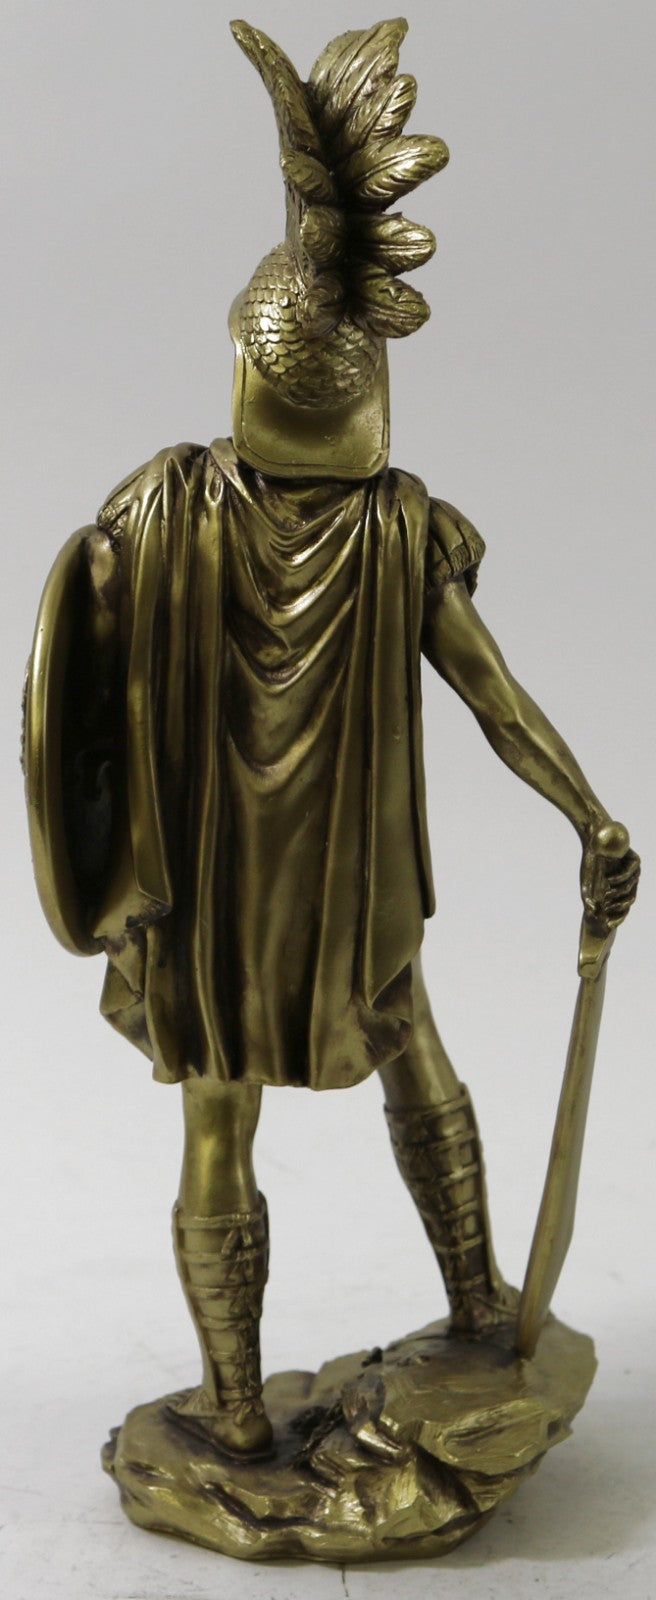 Spartan Warrior Statue With Spear Bronze Bonded Hand Made Sculpture Figure